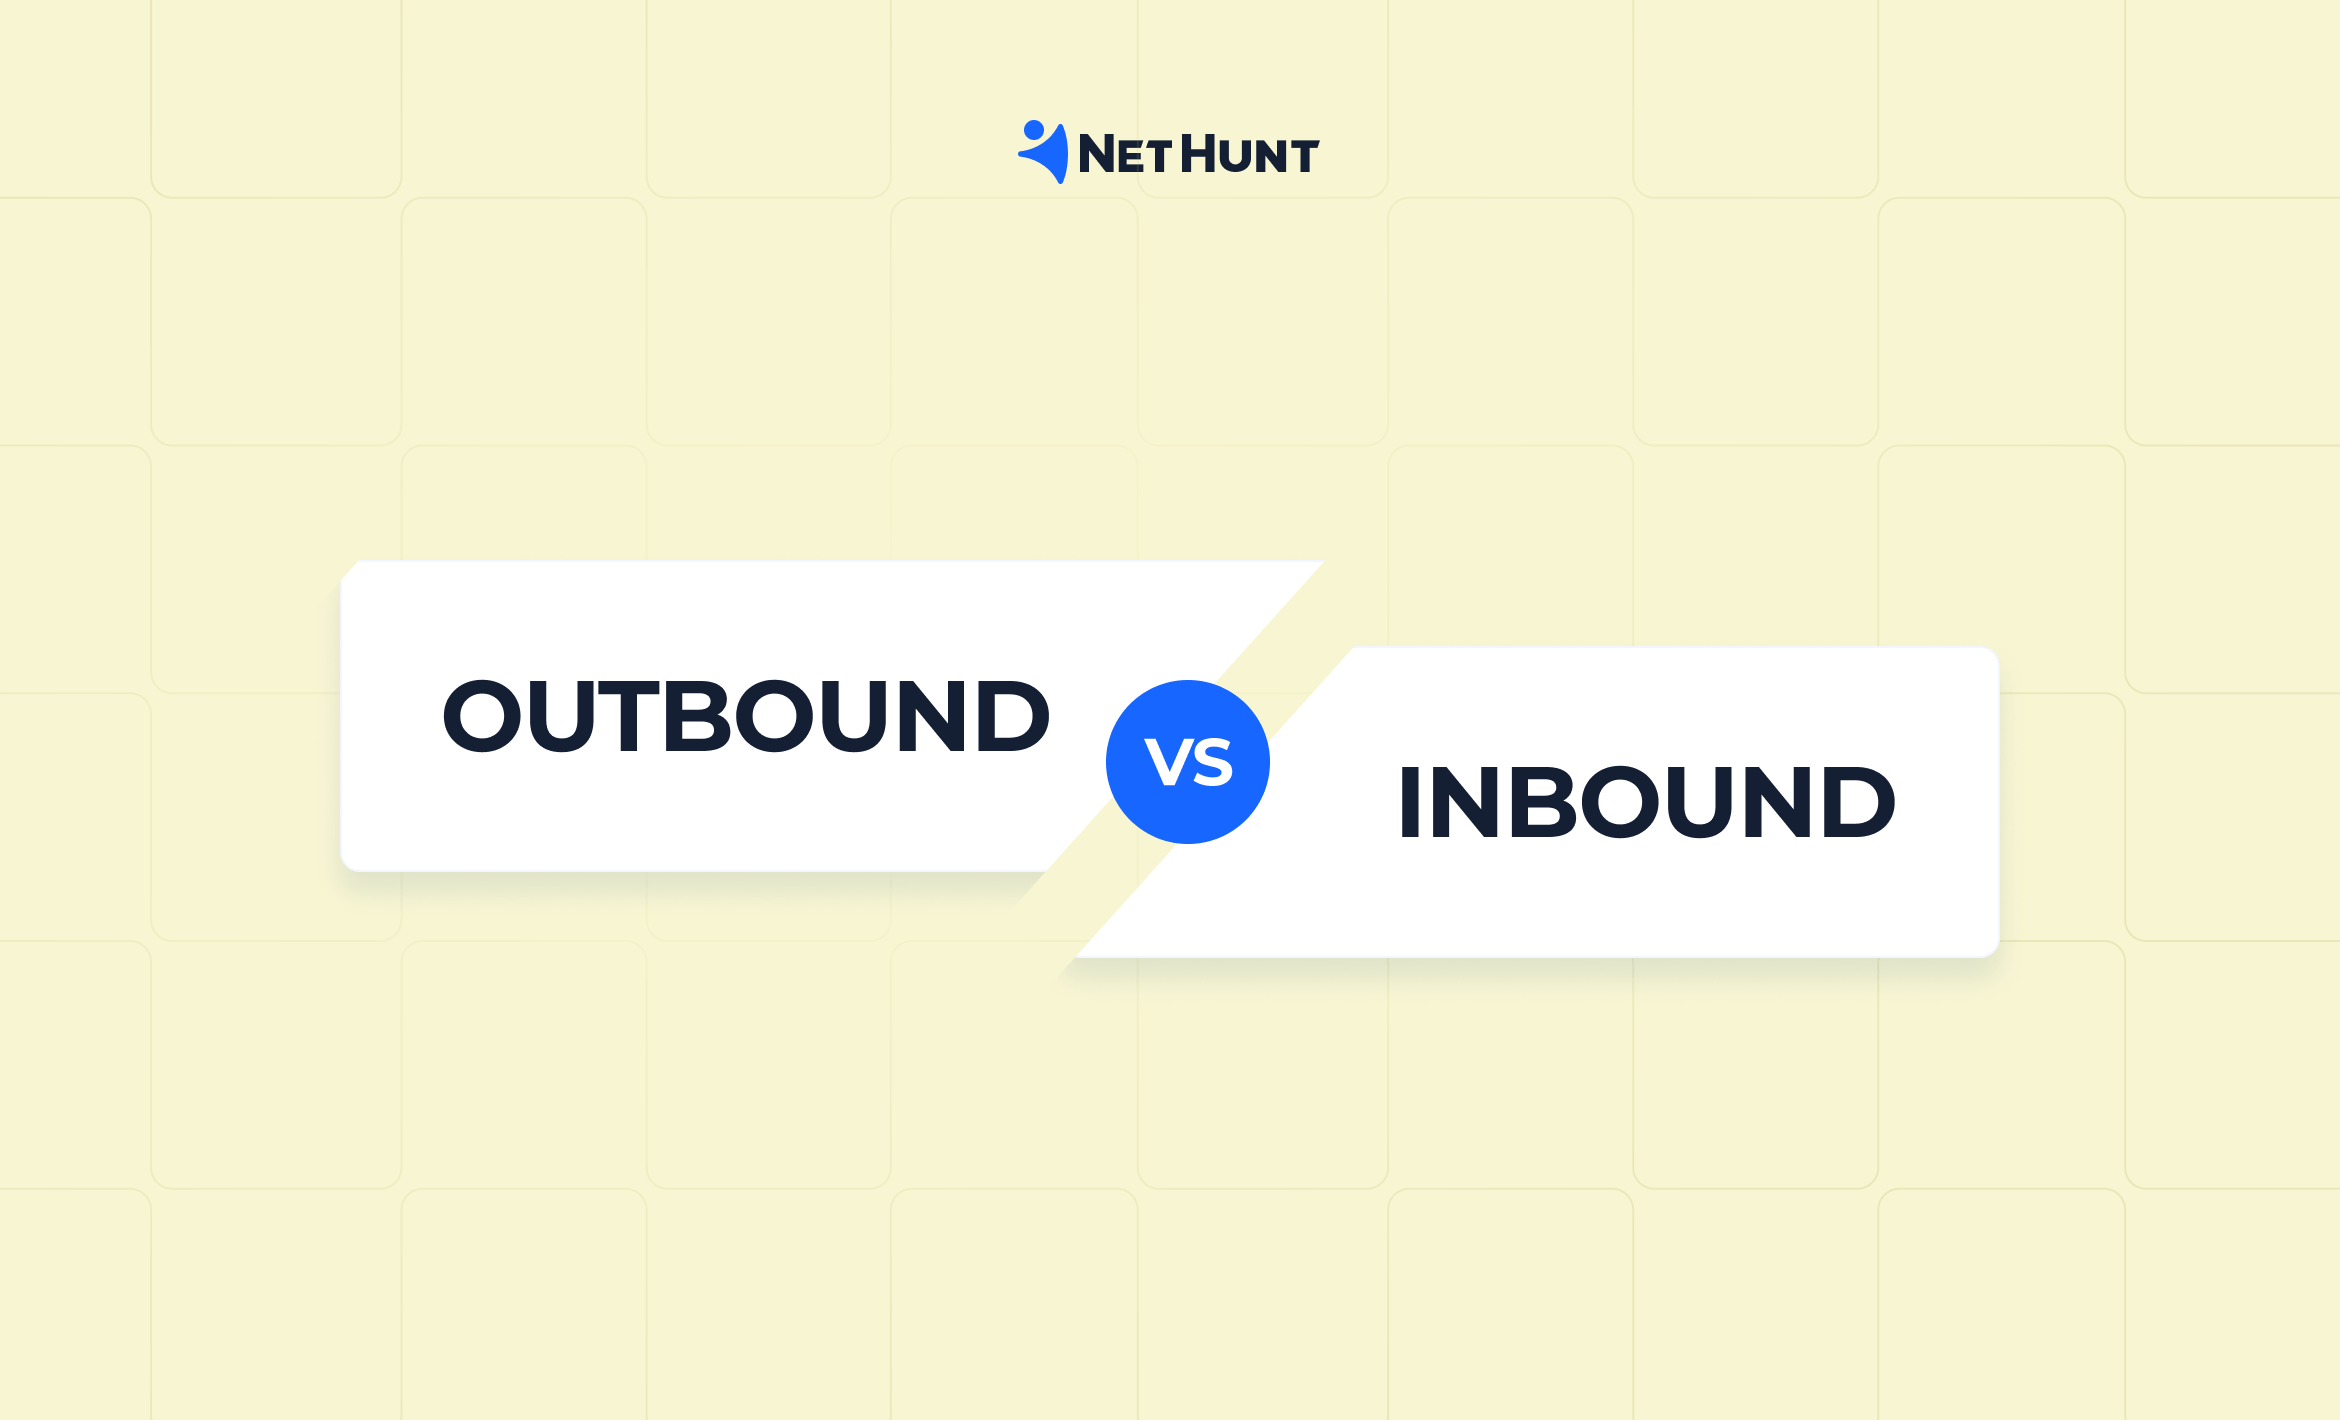 Outbound sales vs inbound sales